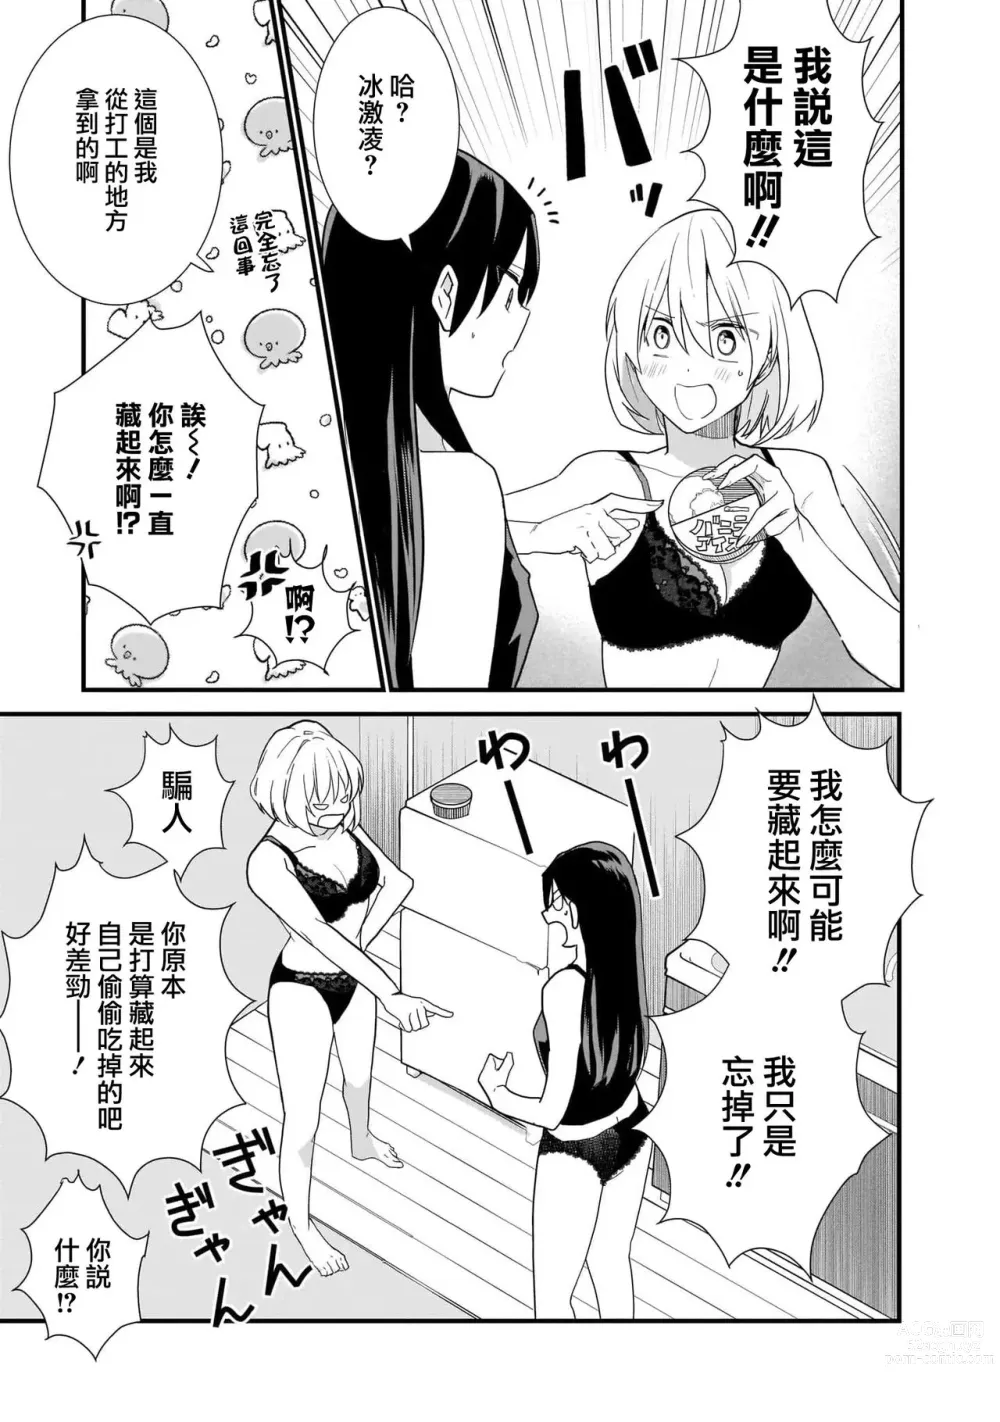 Page 8 of manga 冷却运动